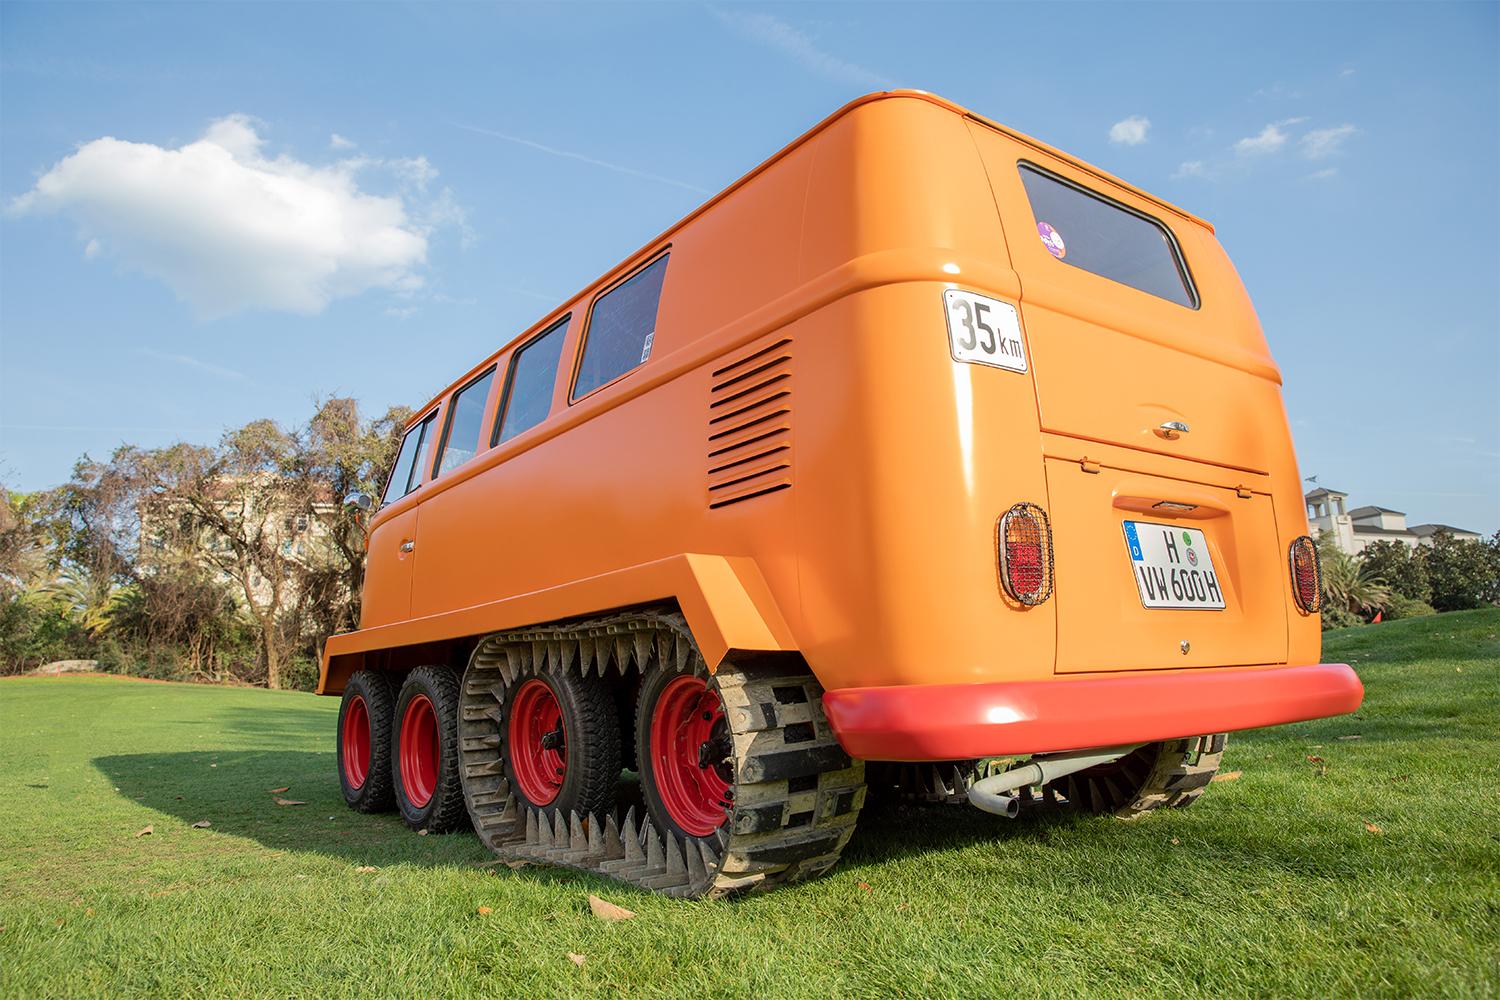 The orange Volkswagen Half-Track Fox, an orange Type 2 Transporter van with tank-like tracks